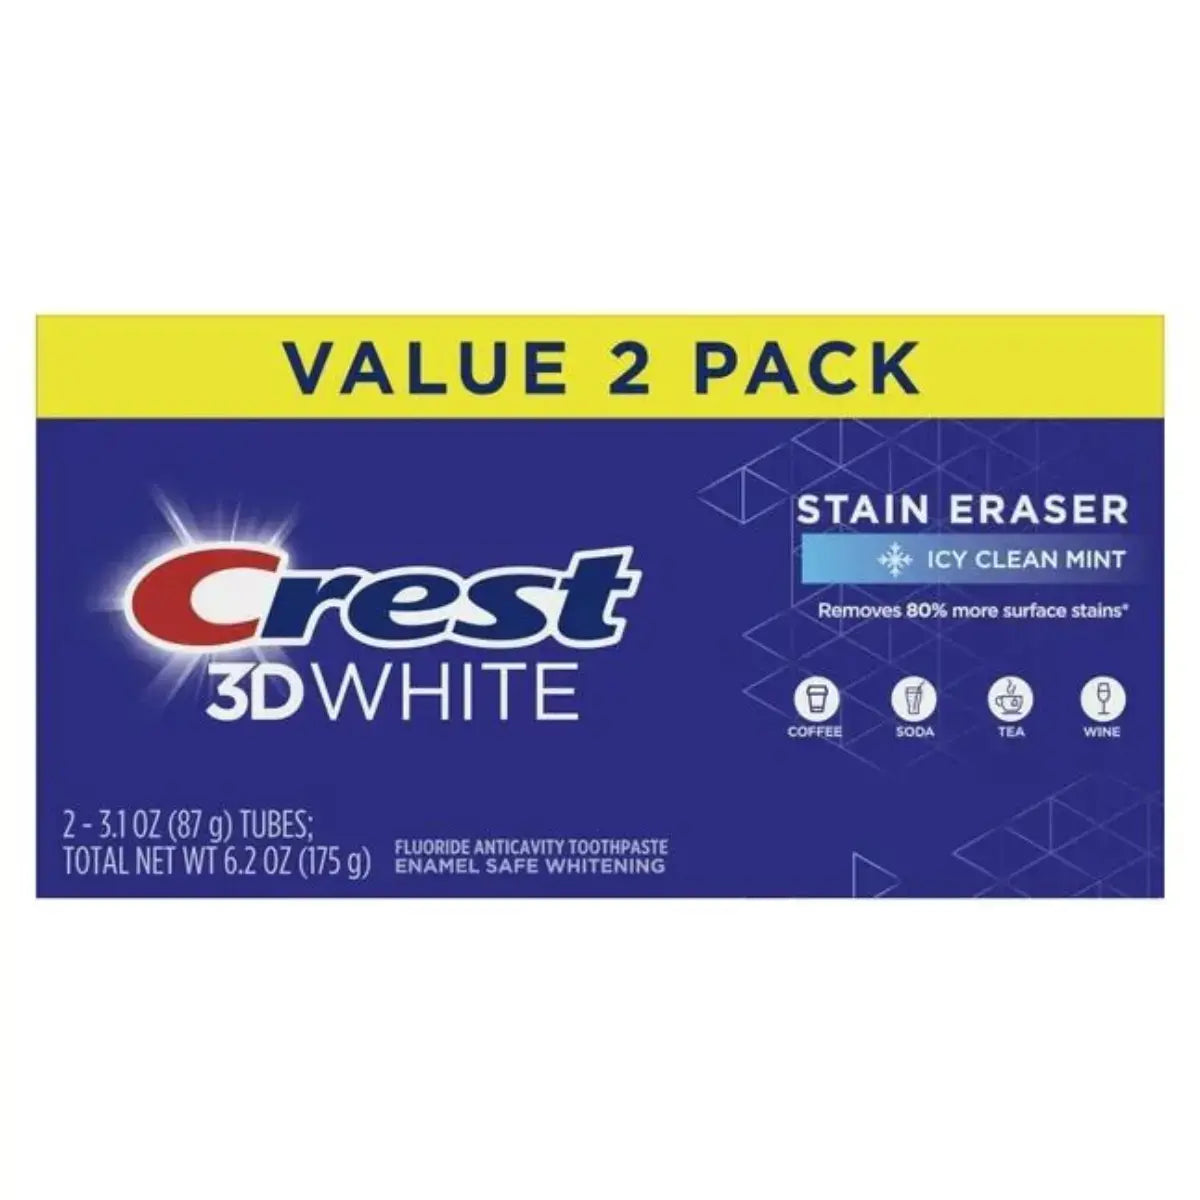 Tandpasta Crest 3D White Stain Eraser Icy Clean Mint Value 2 Pack 175g